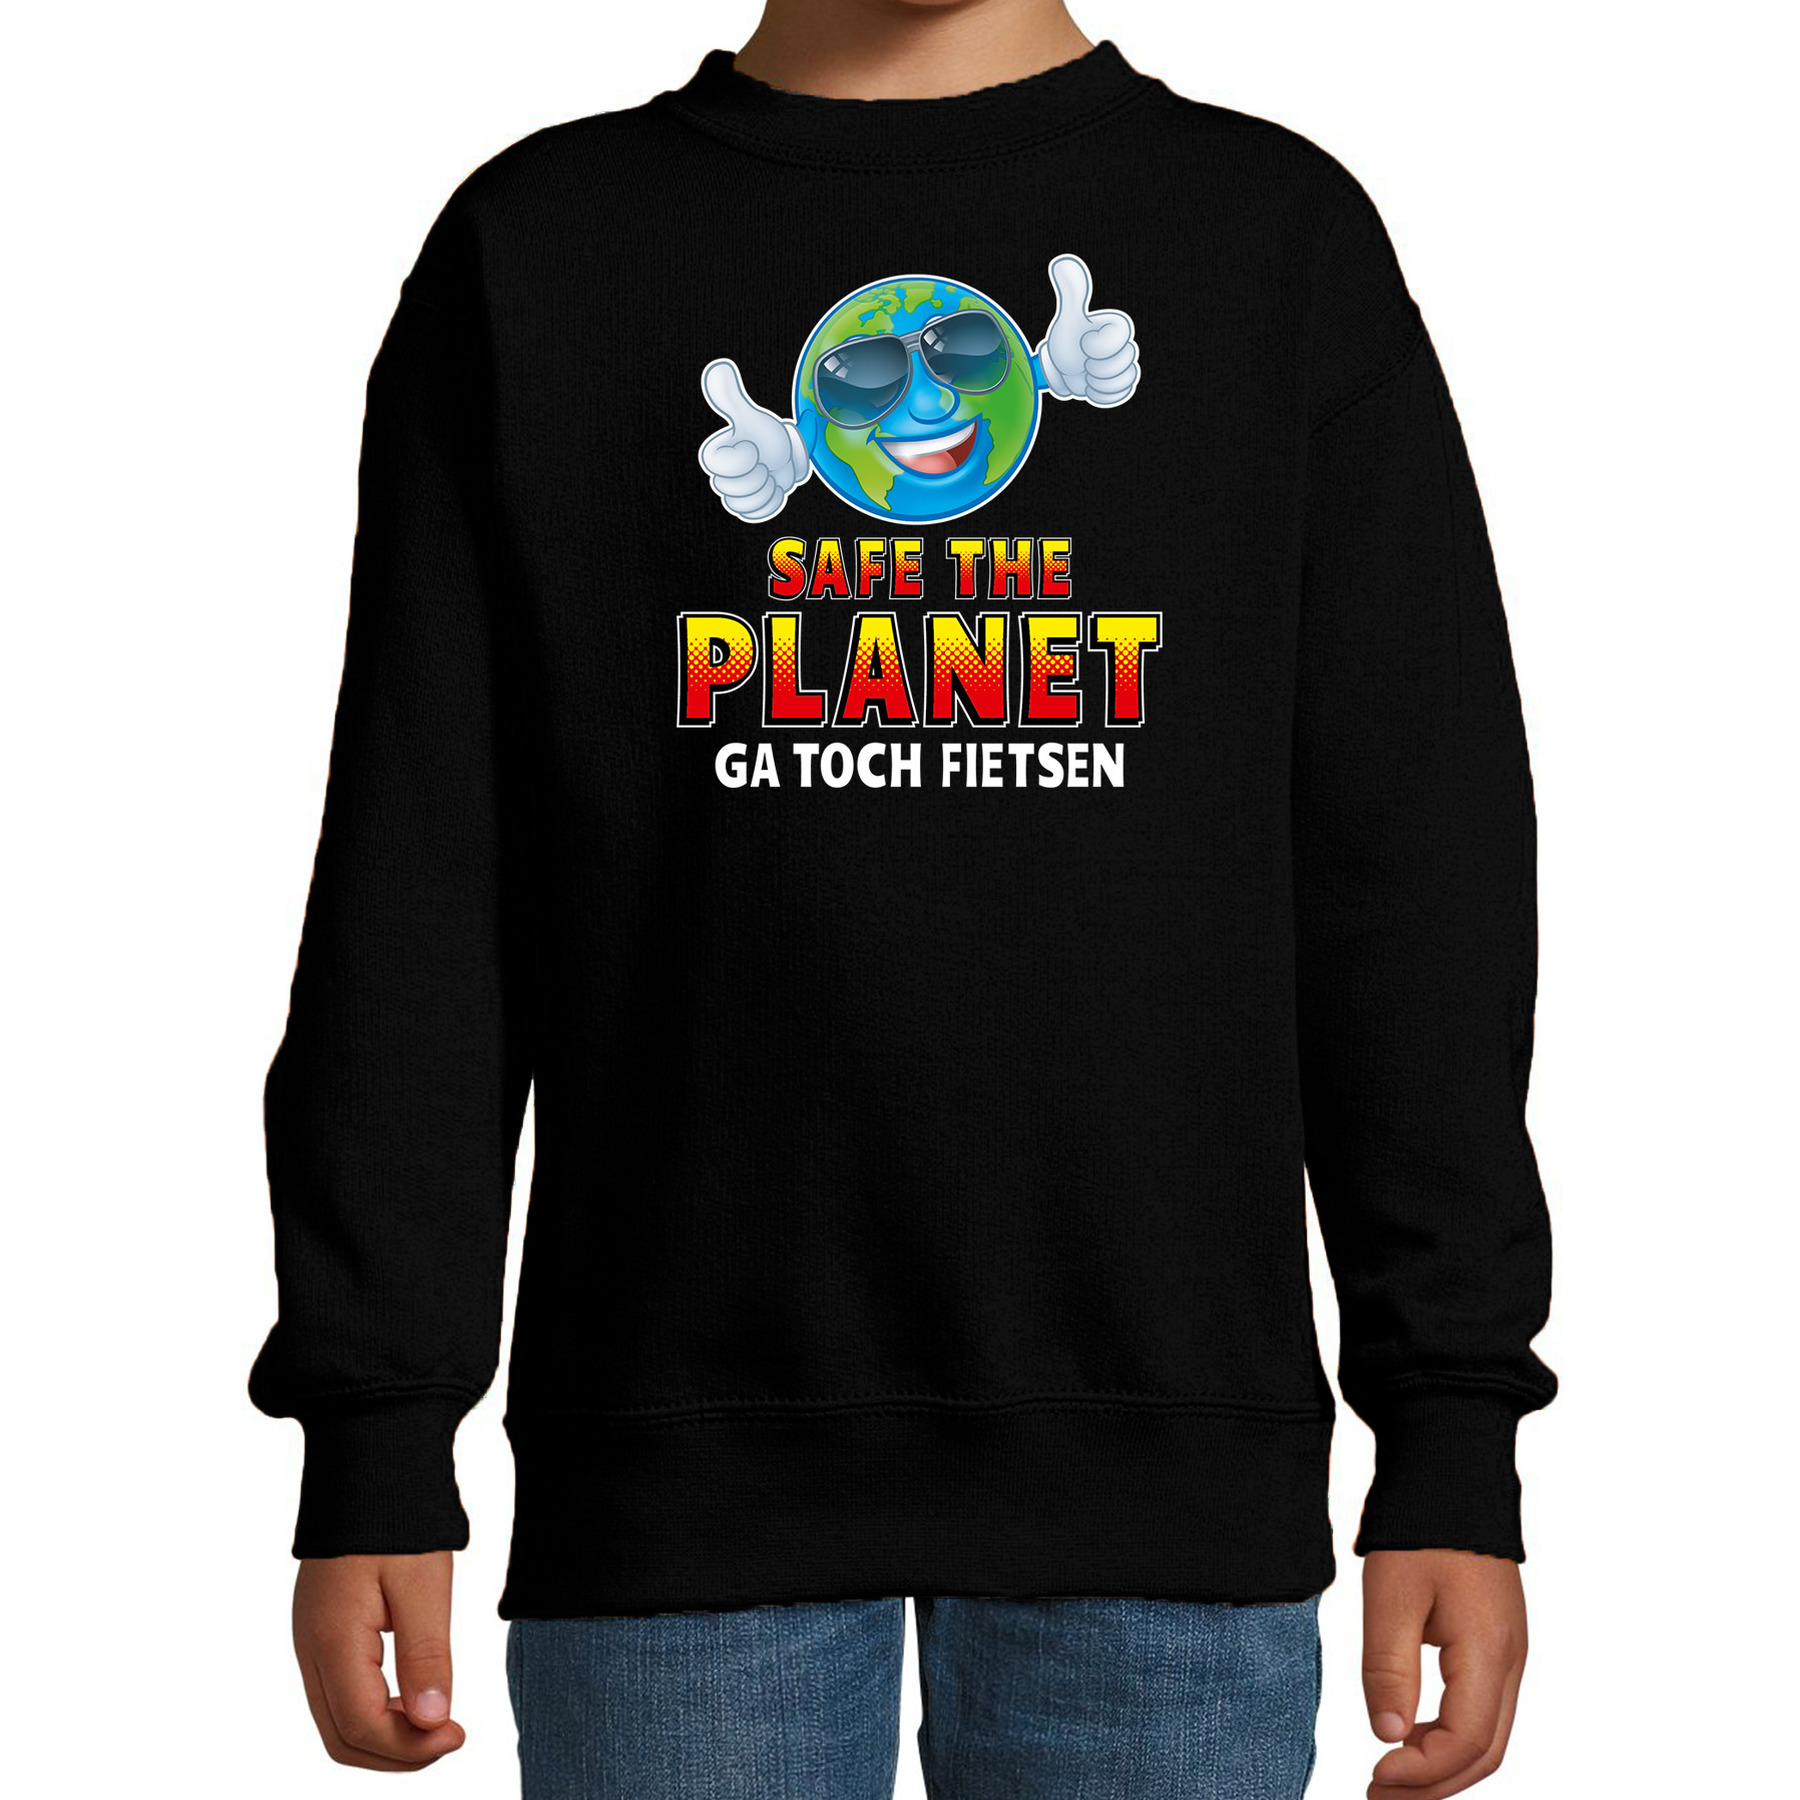 Funny emoticon sweater safe the planet zwart voor kids